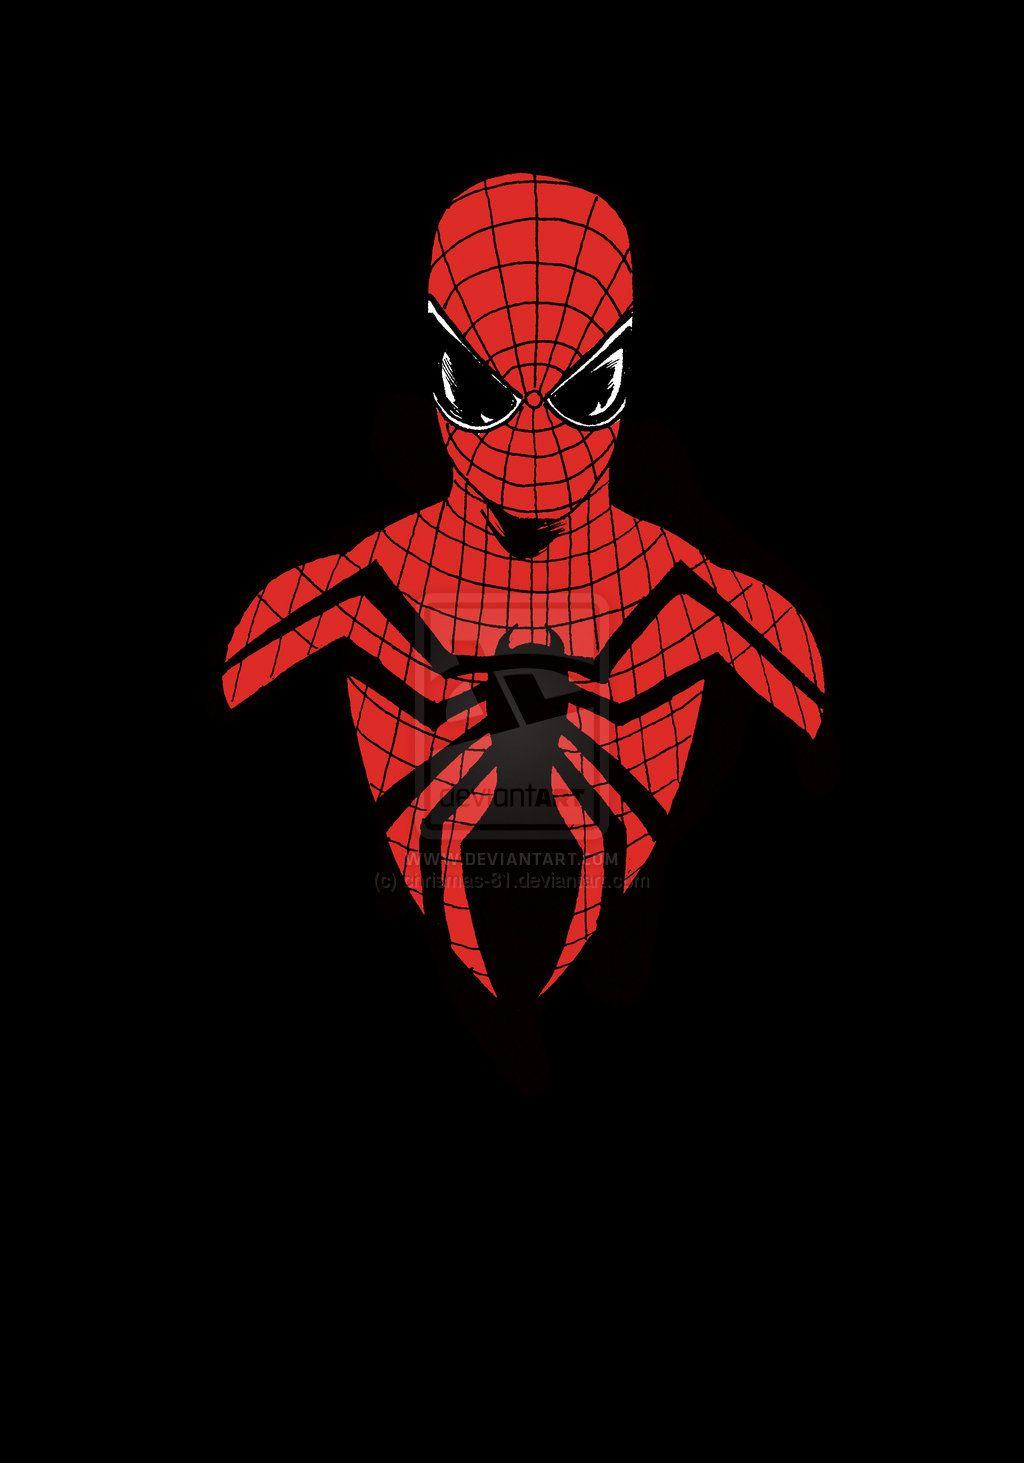 Free download Spiderman Logo Wallpaper iPhone 5 Spiderman logo